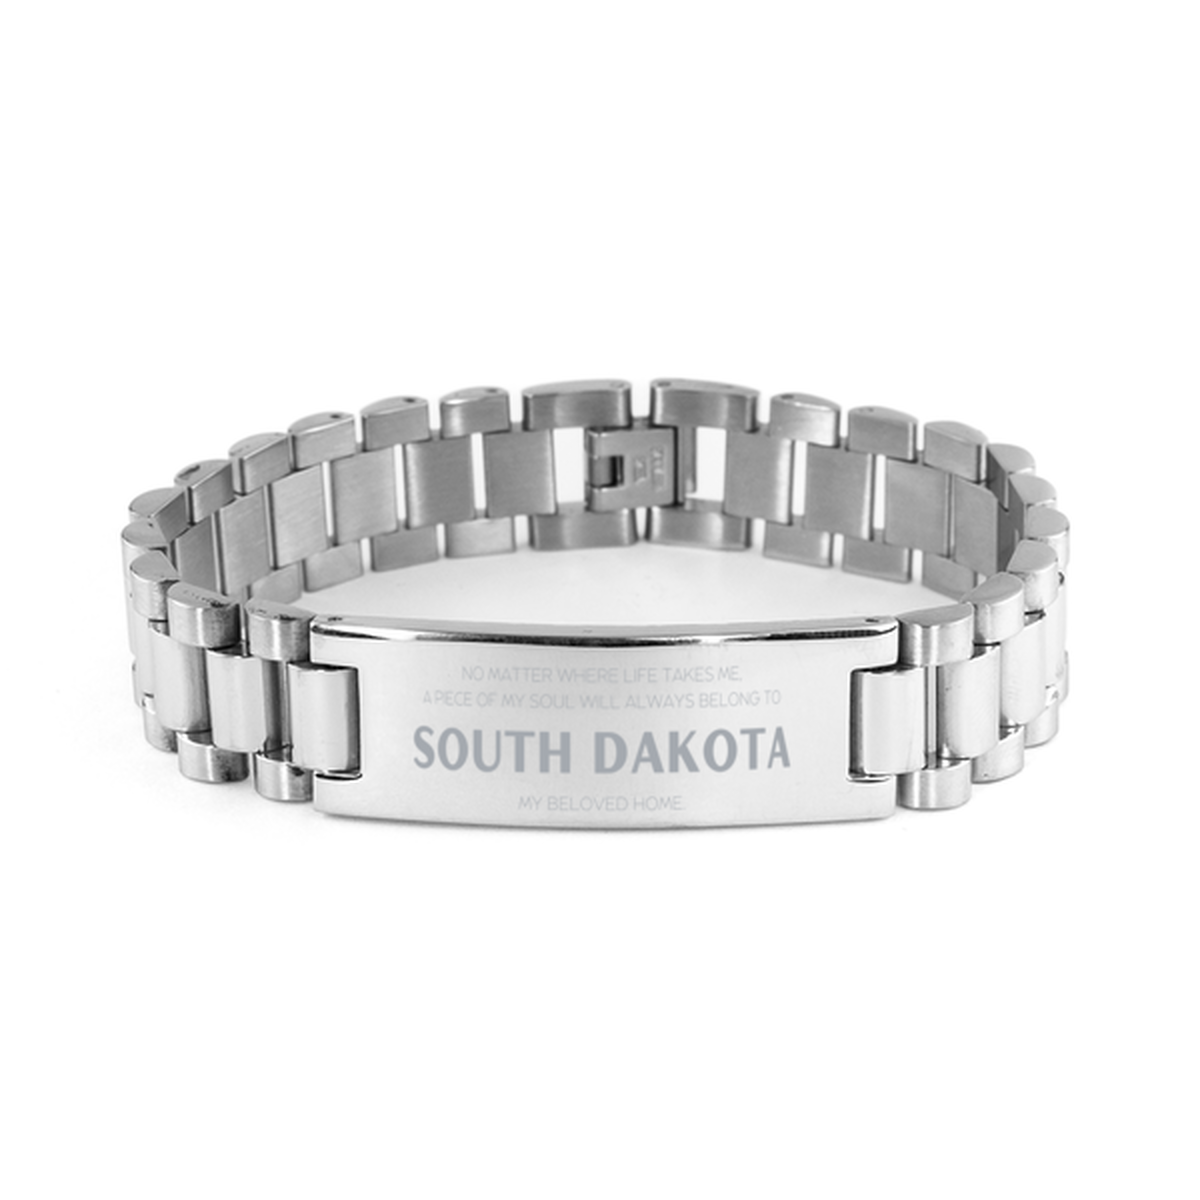 Love South Dakota State Gifts, My soul will always belong to South Dakota, Proud Ladder Stainless Steel Bracelet, Birthday Unique Gifts For South Dakota Men, Women, Friends